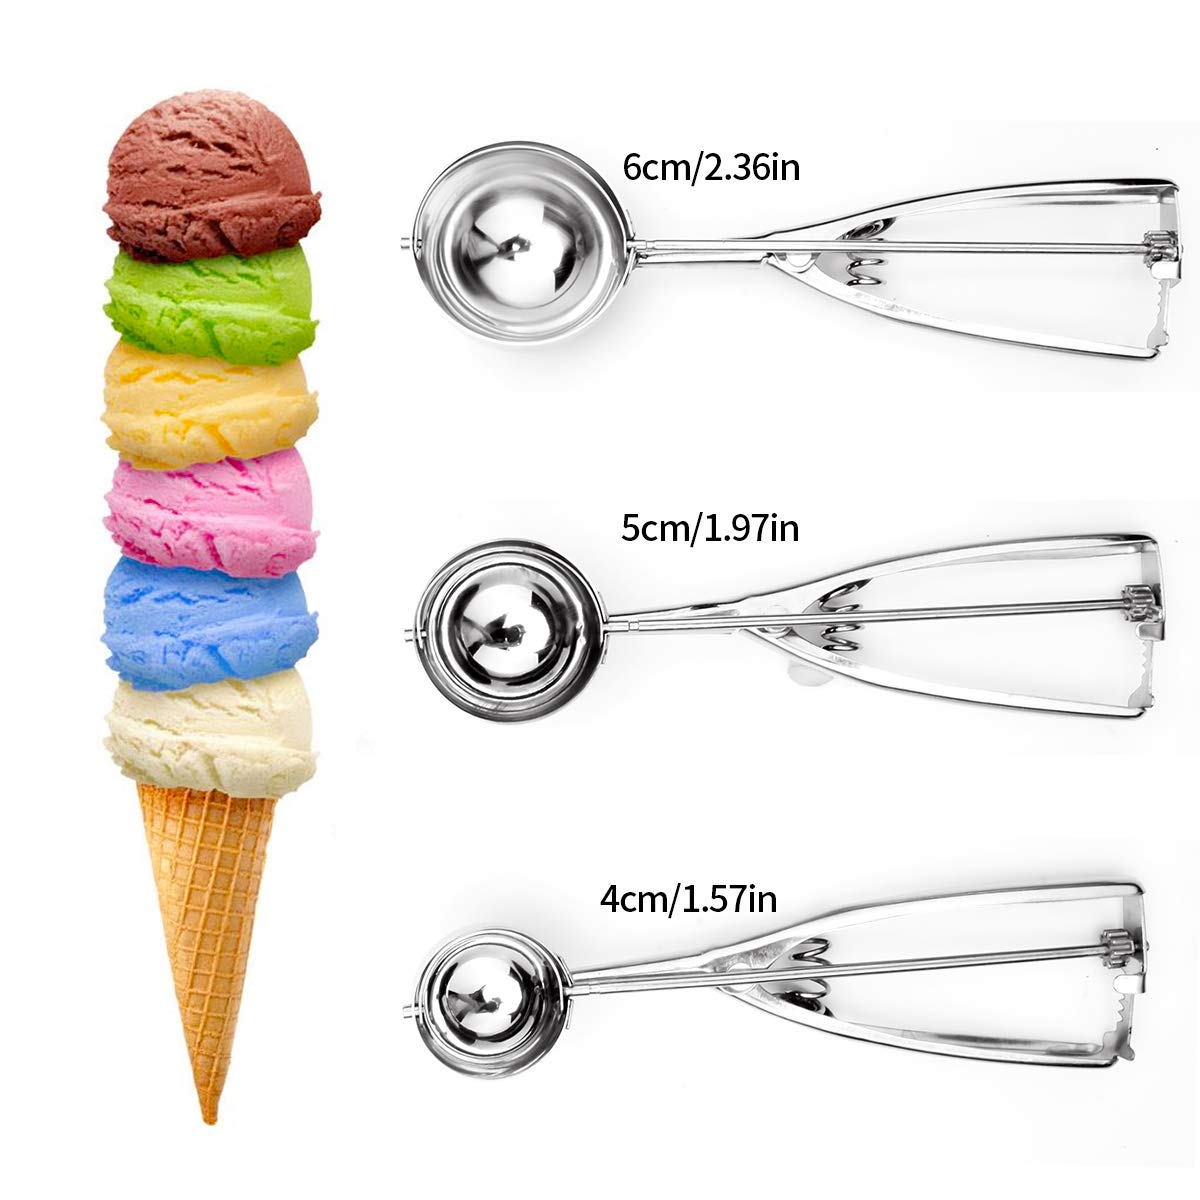 BlauKe Stainless Steel Ice Cream Scoop, Professional Ice Cream Scooper with Comfortable Non-Slip Rubber Grip